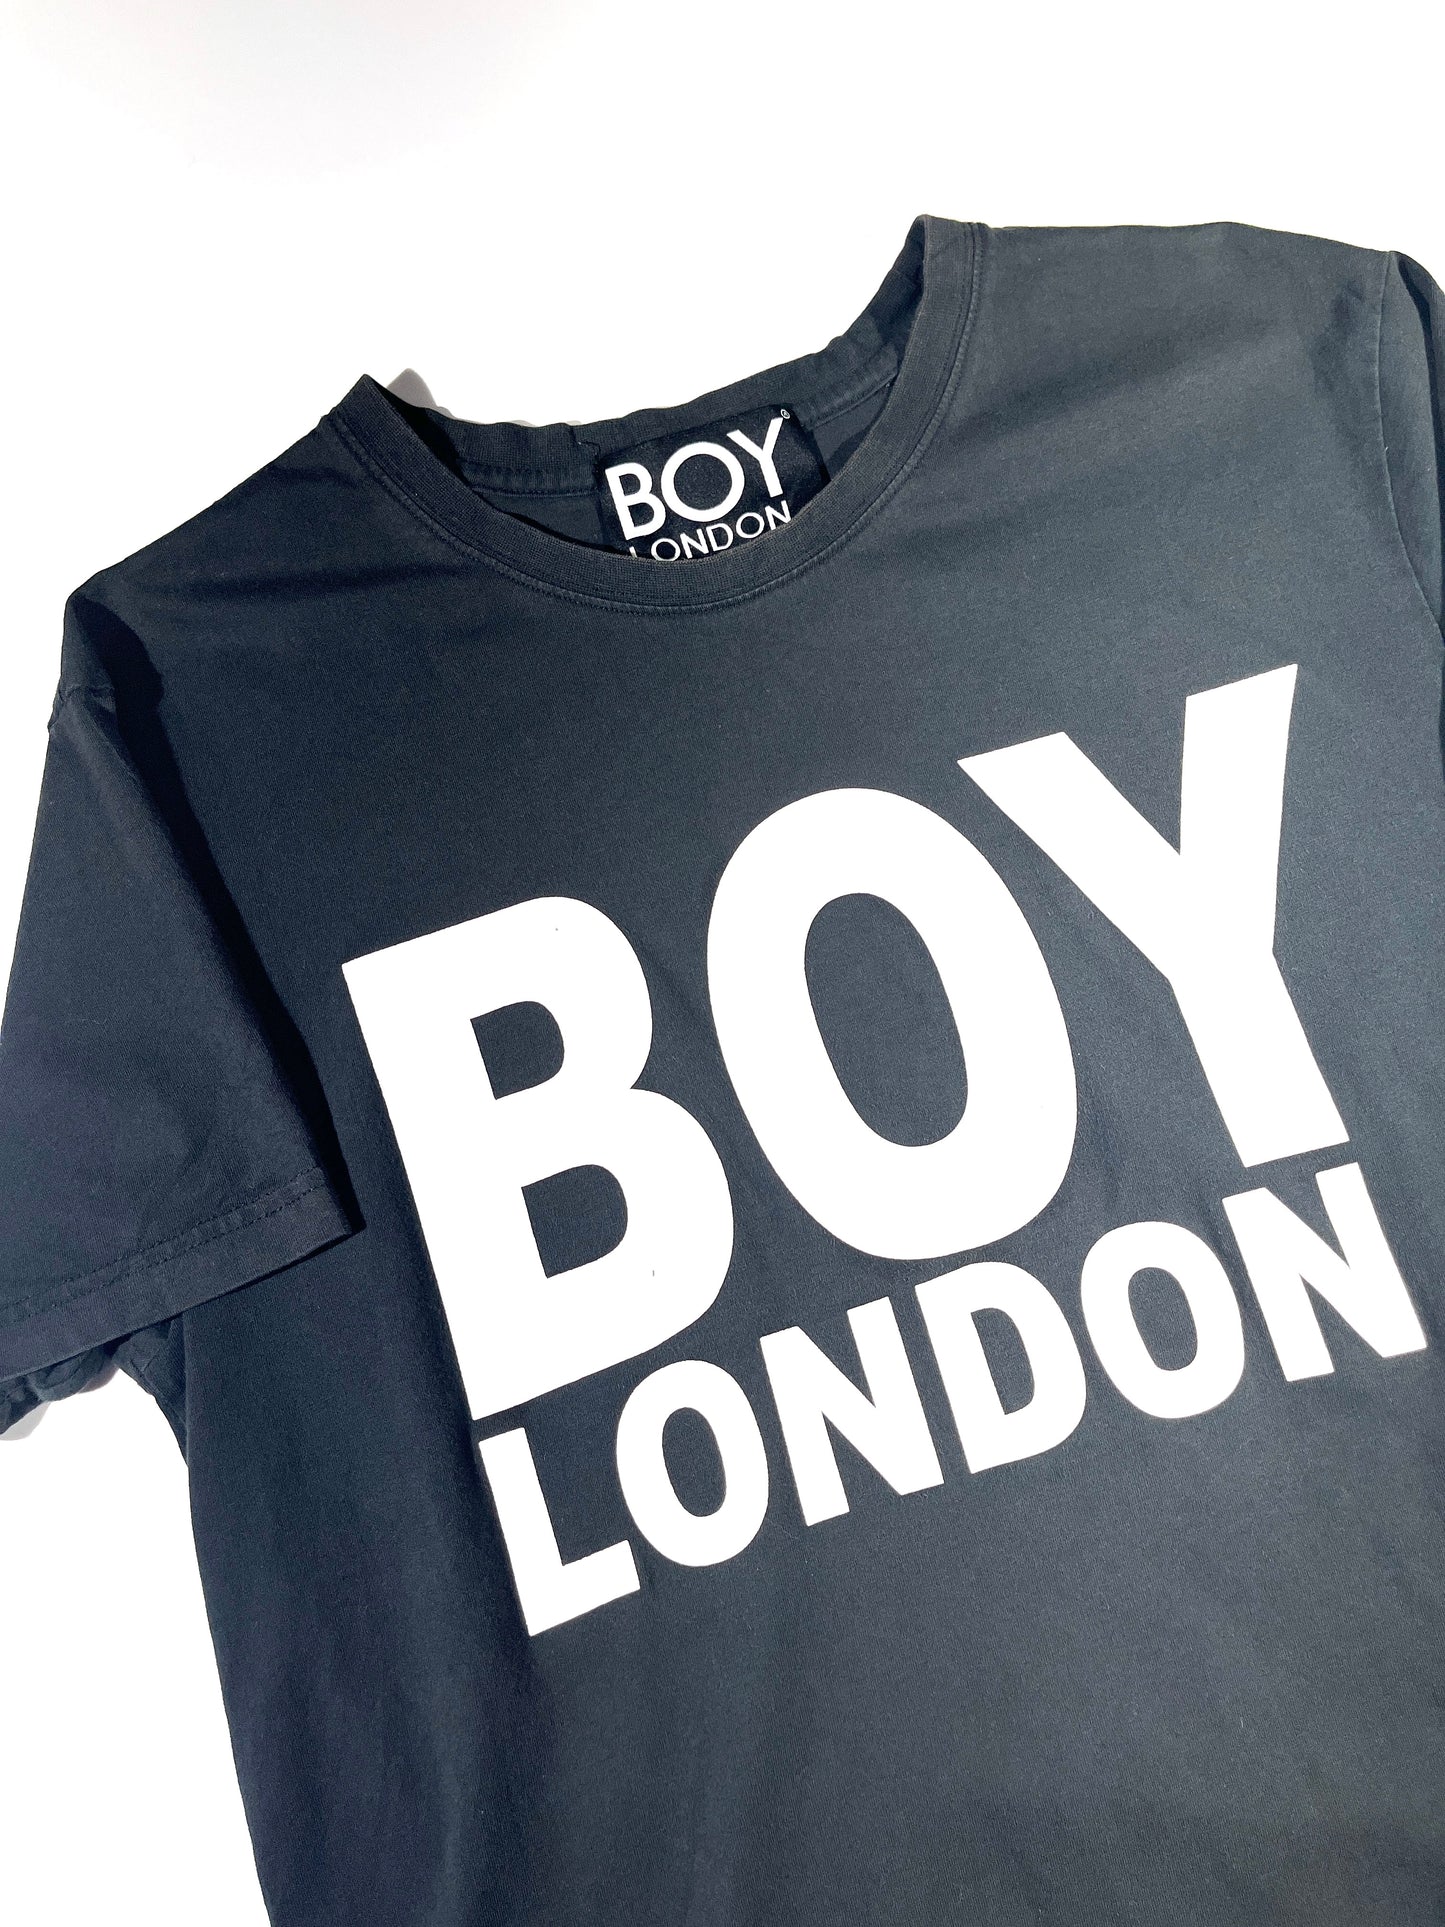 Vintage Boy London T-Shirt